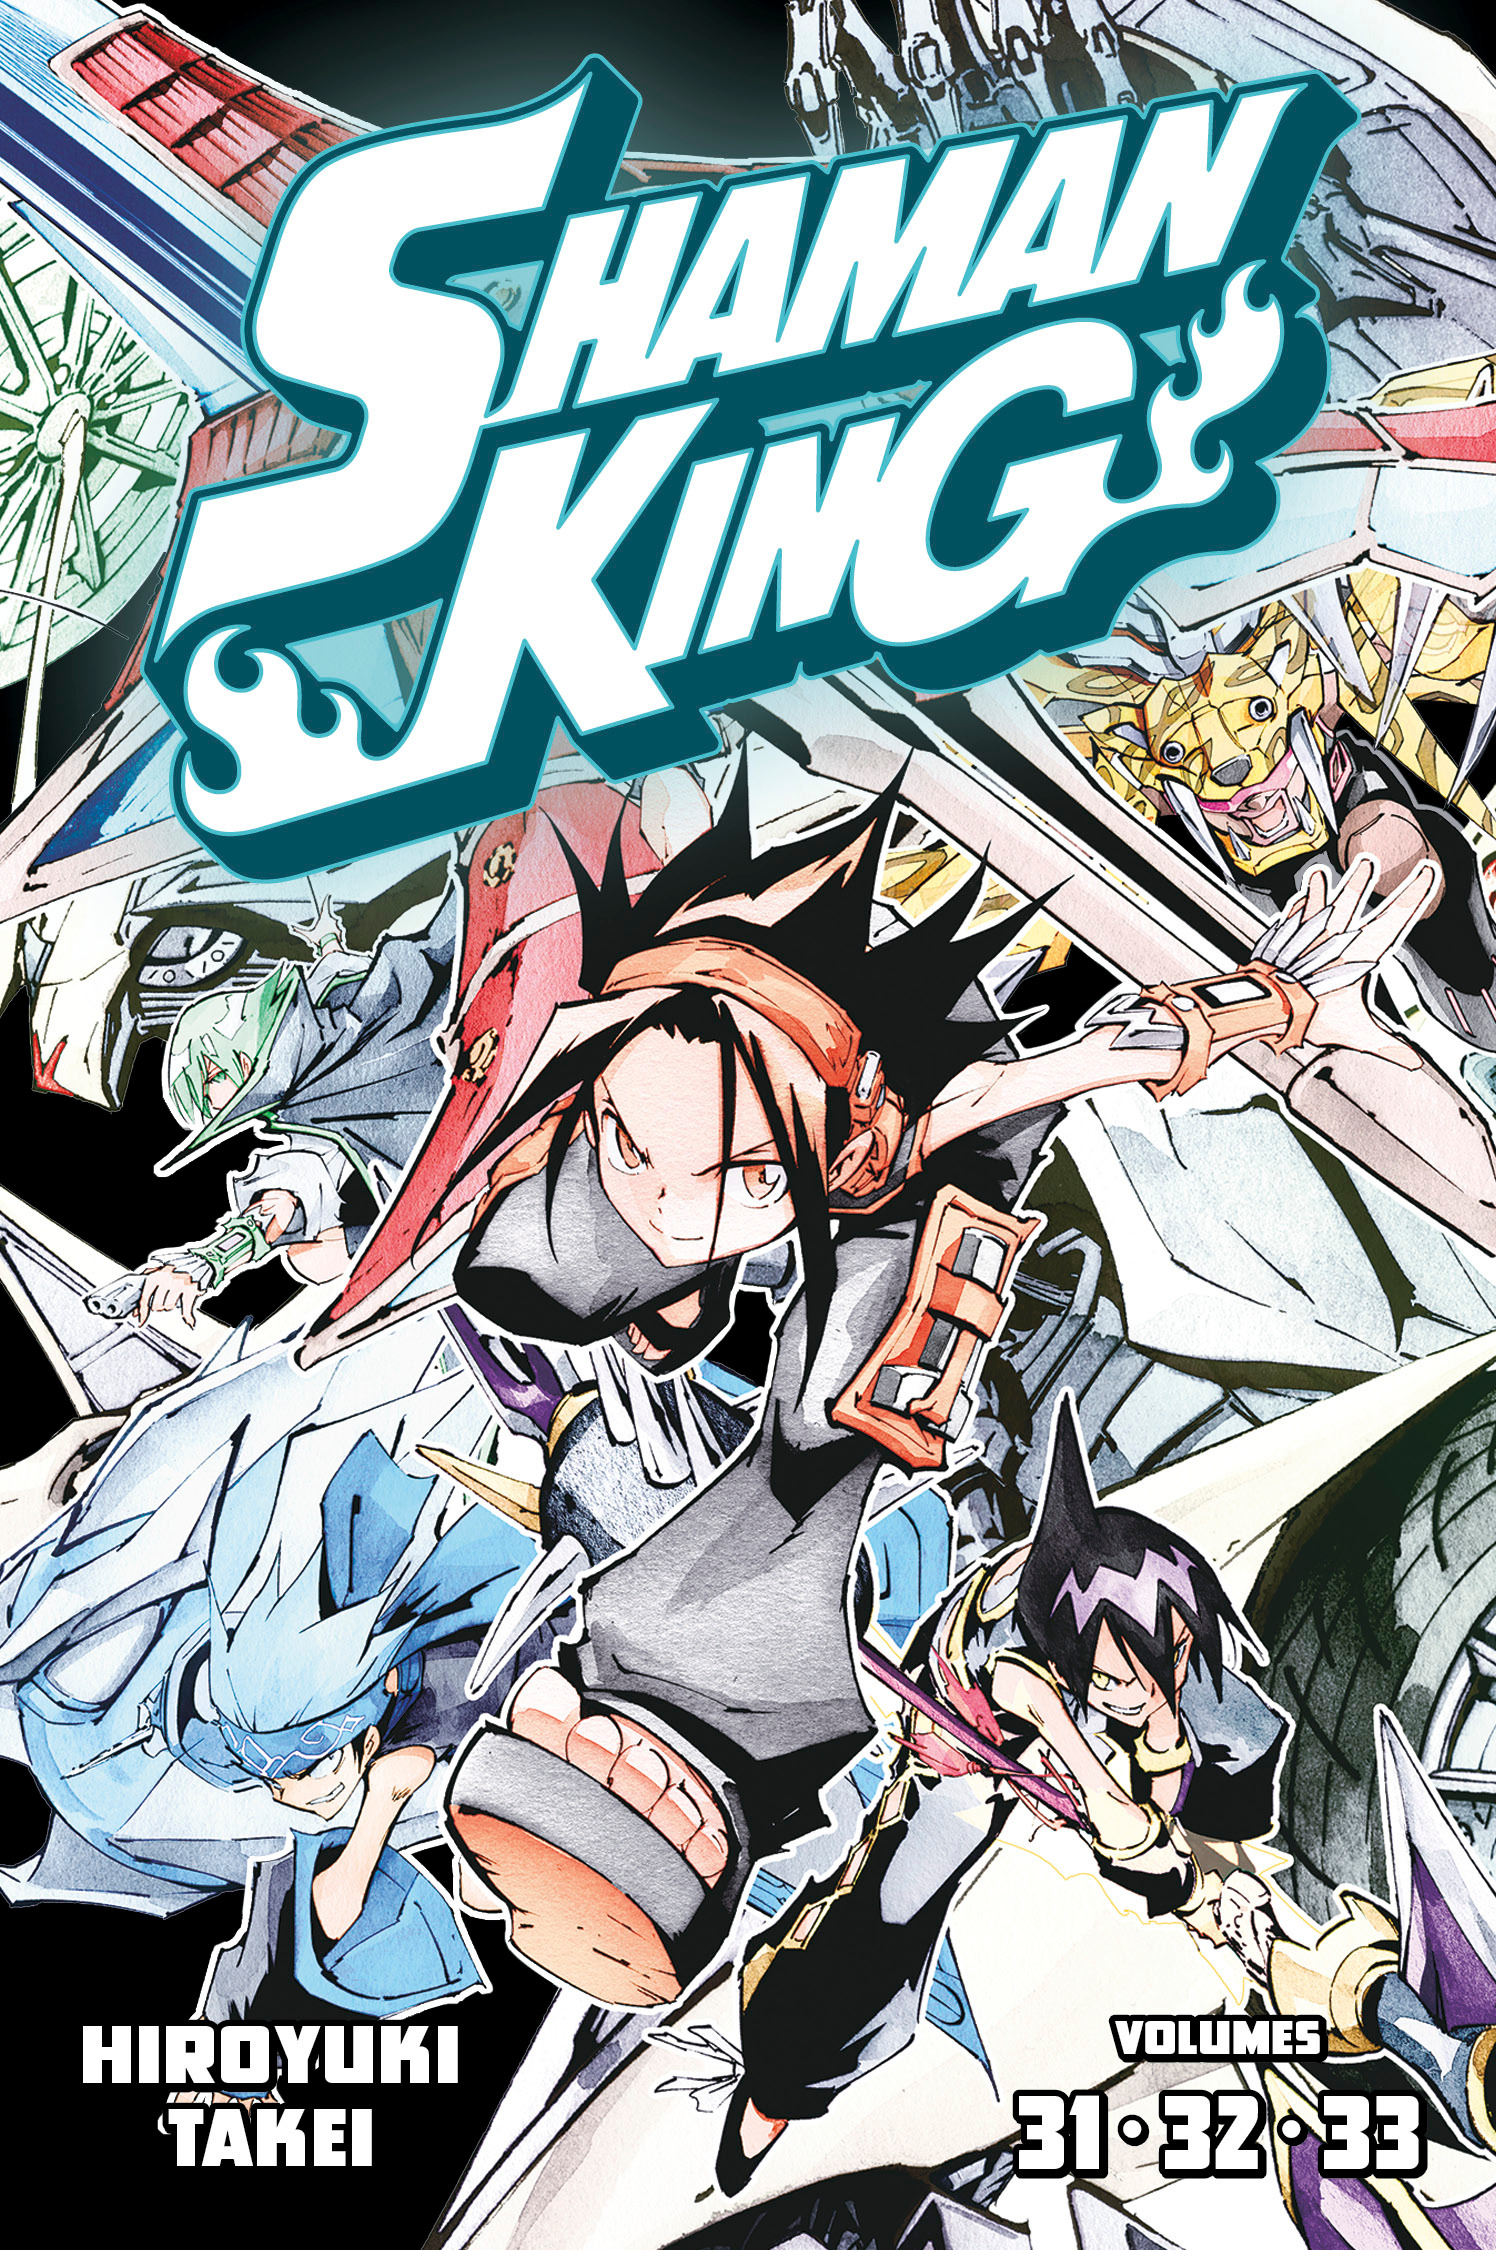 Shaman King Omnibus Manga Volume 11 (Vol 31-33)